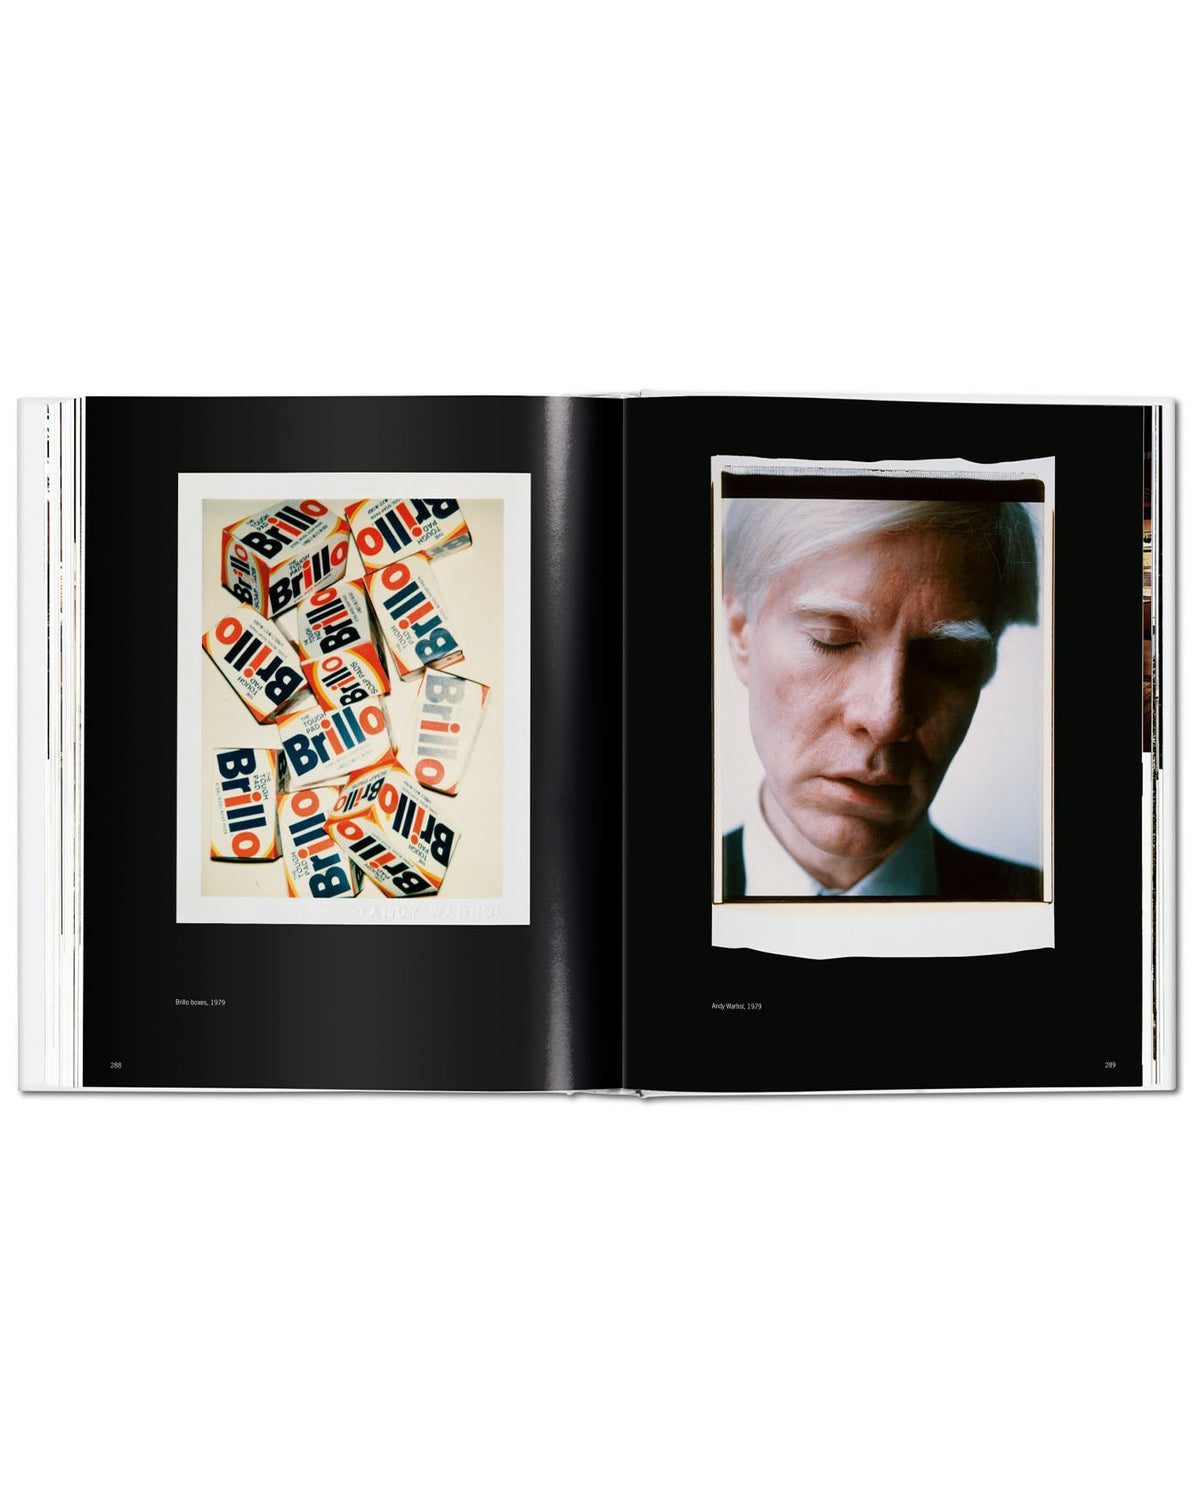 Warhol Polaroids